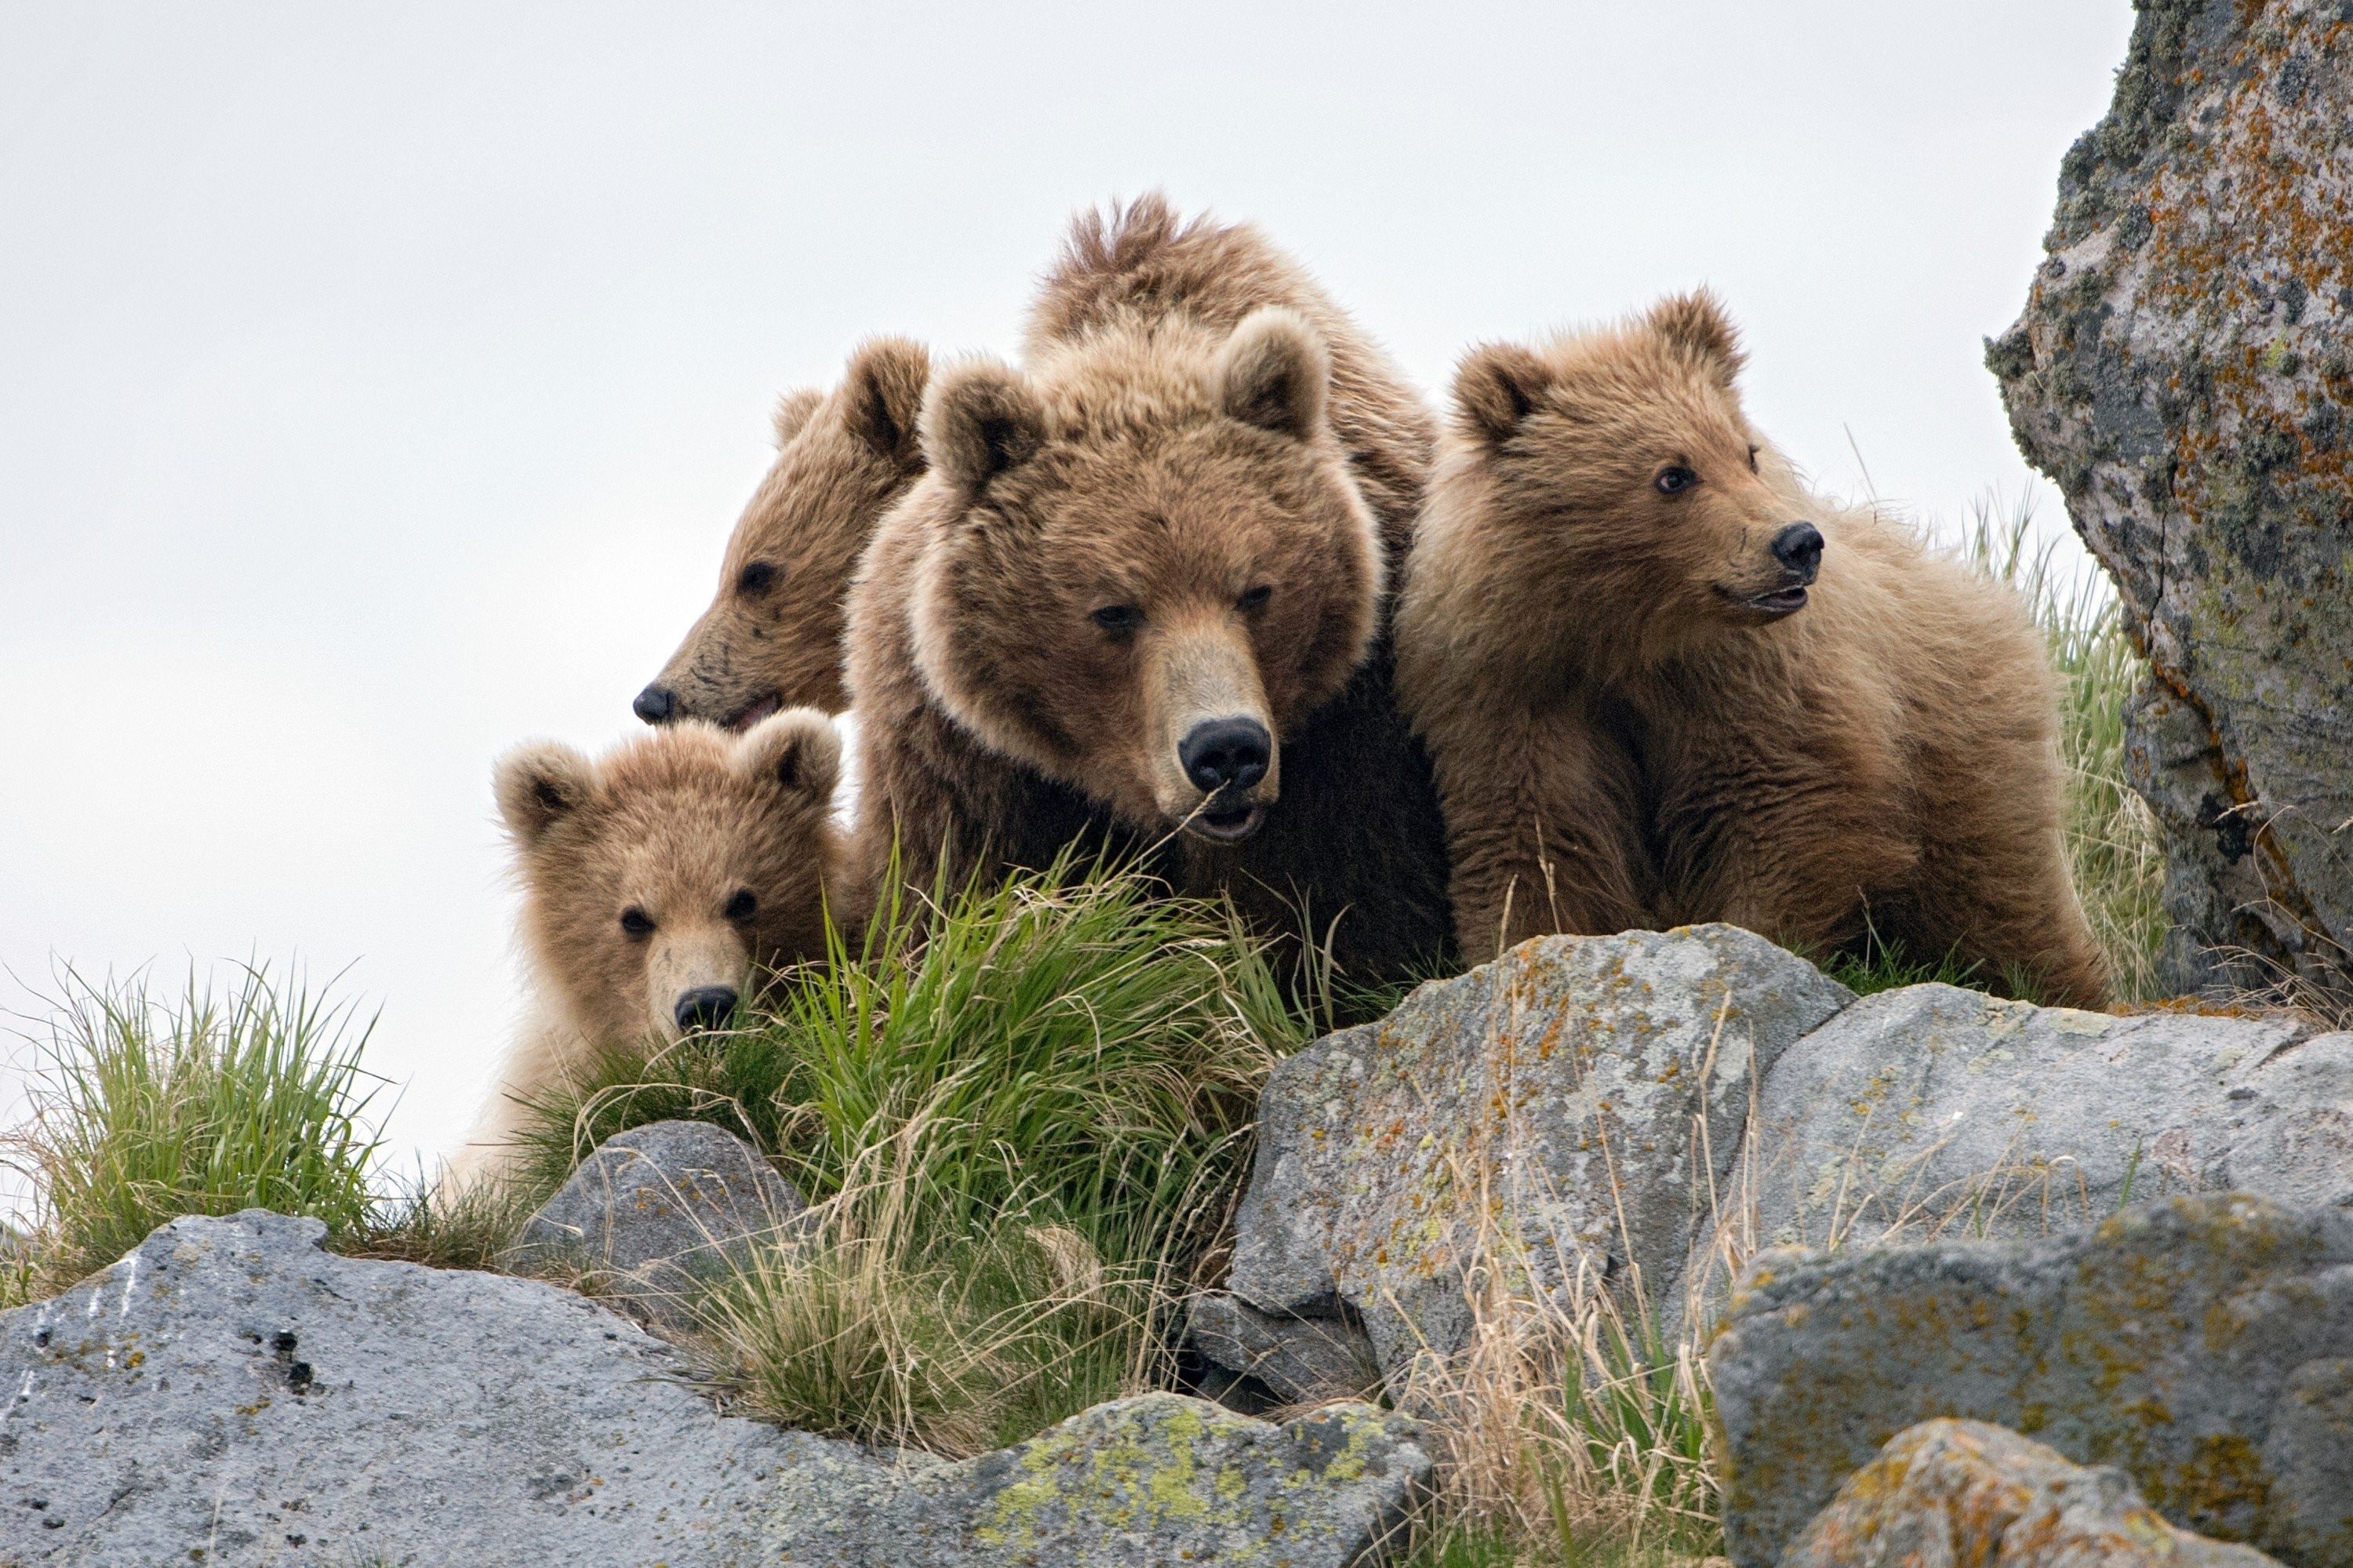 Фотографии 3 медведей. Бурый медведь Камчатки. Камчатский бурый медведь. Семья медведей. Медведица с медвежатами.